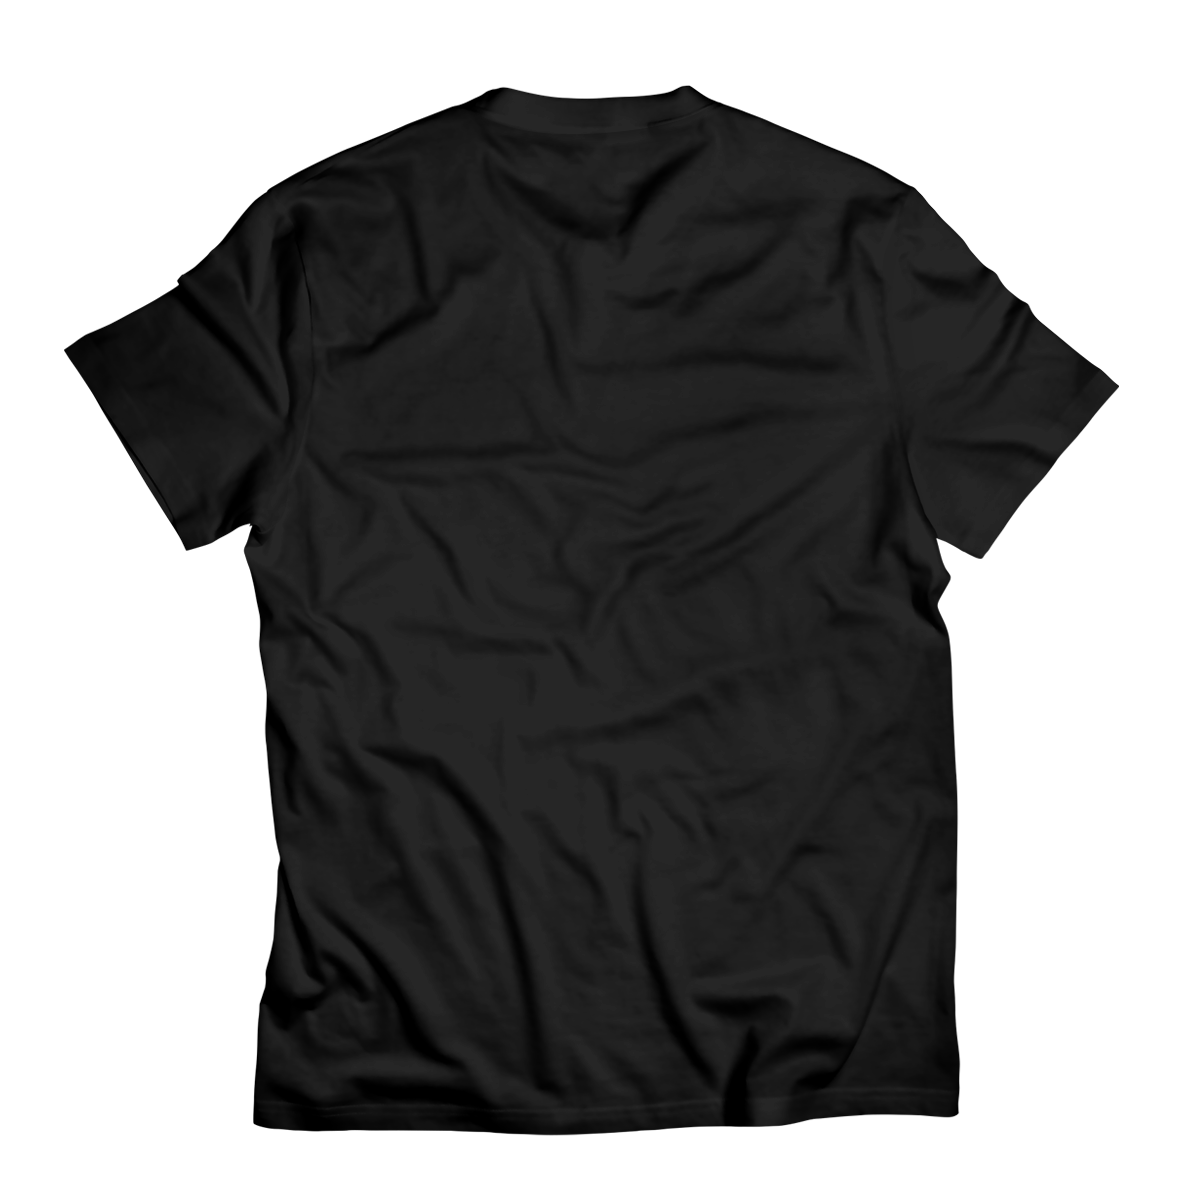 Pug-Torn Unisex T-Shirt